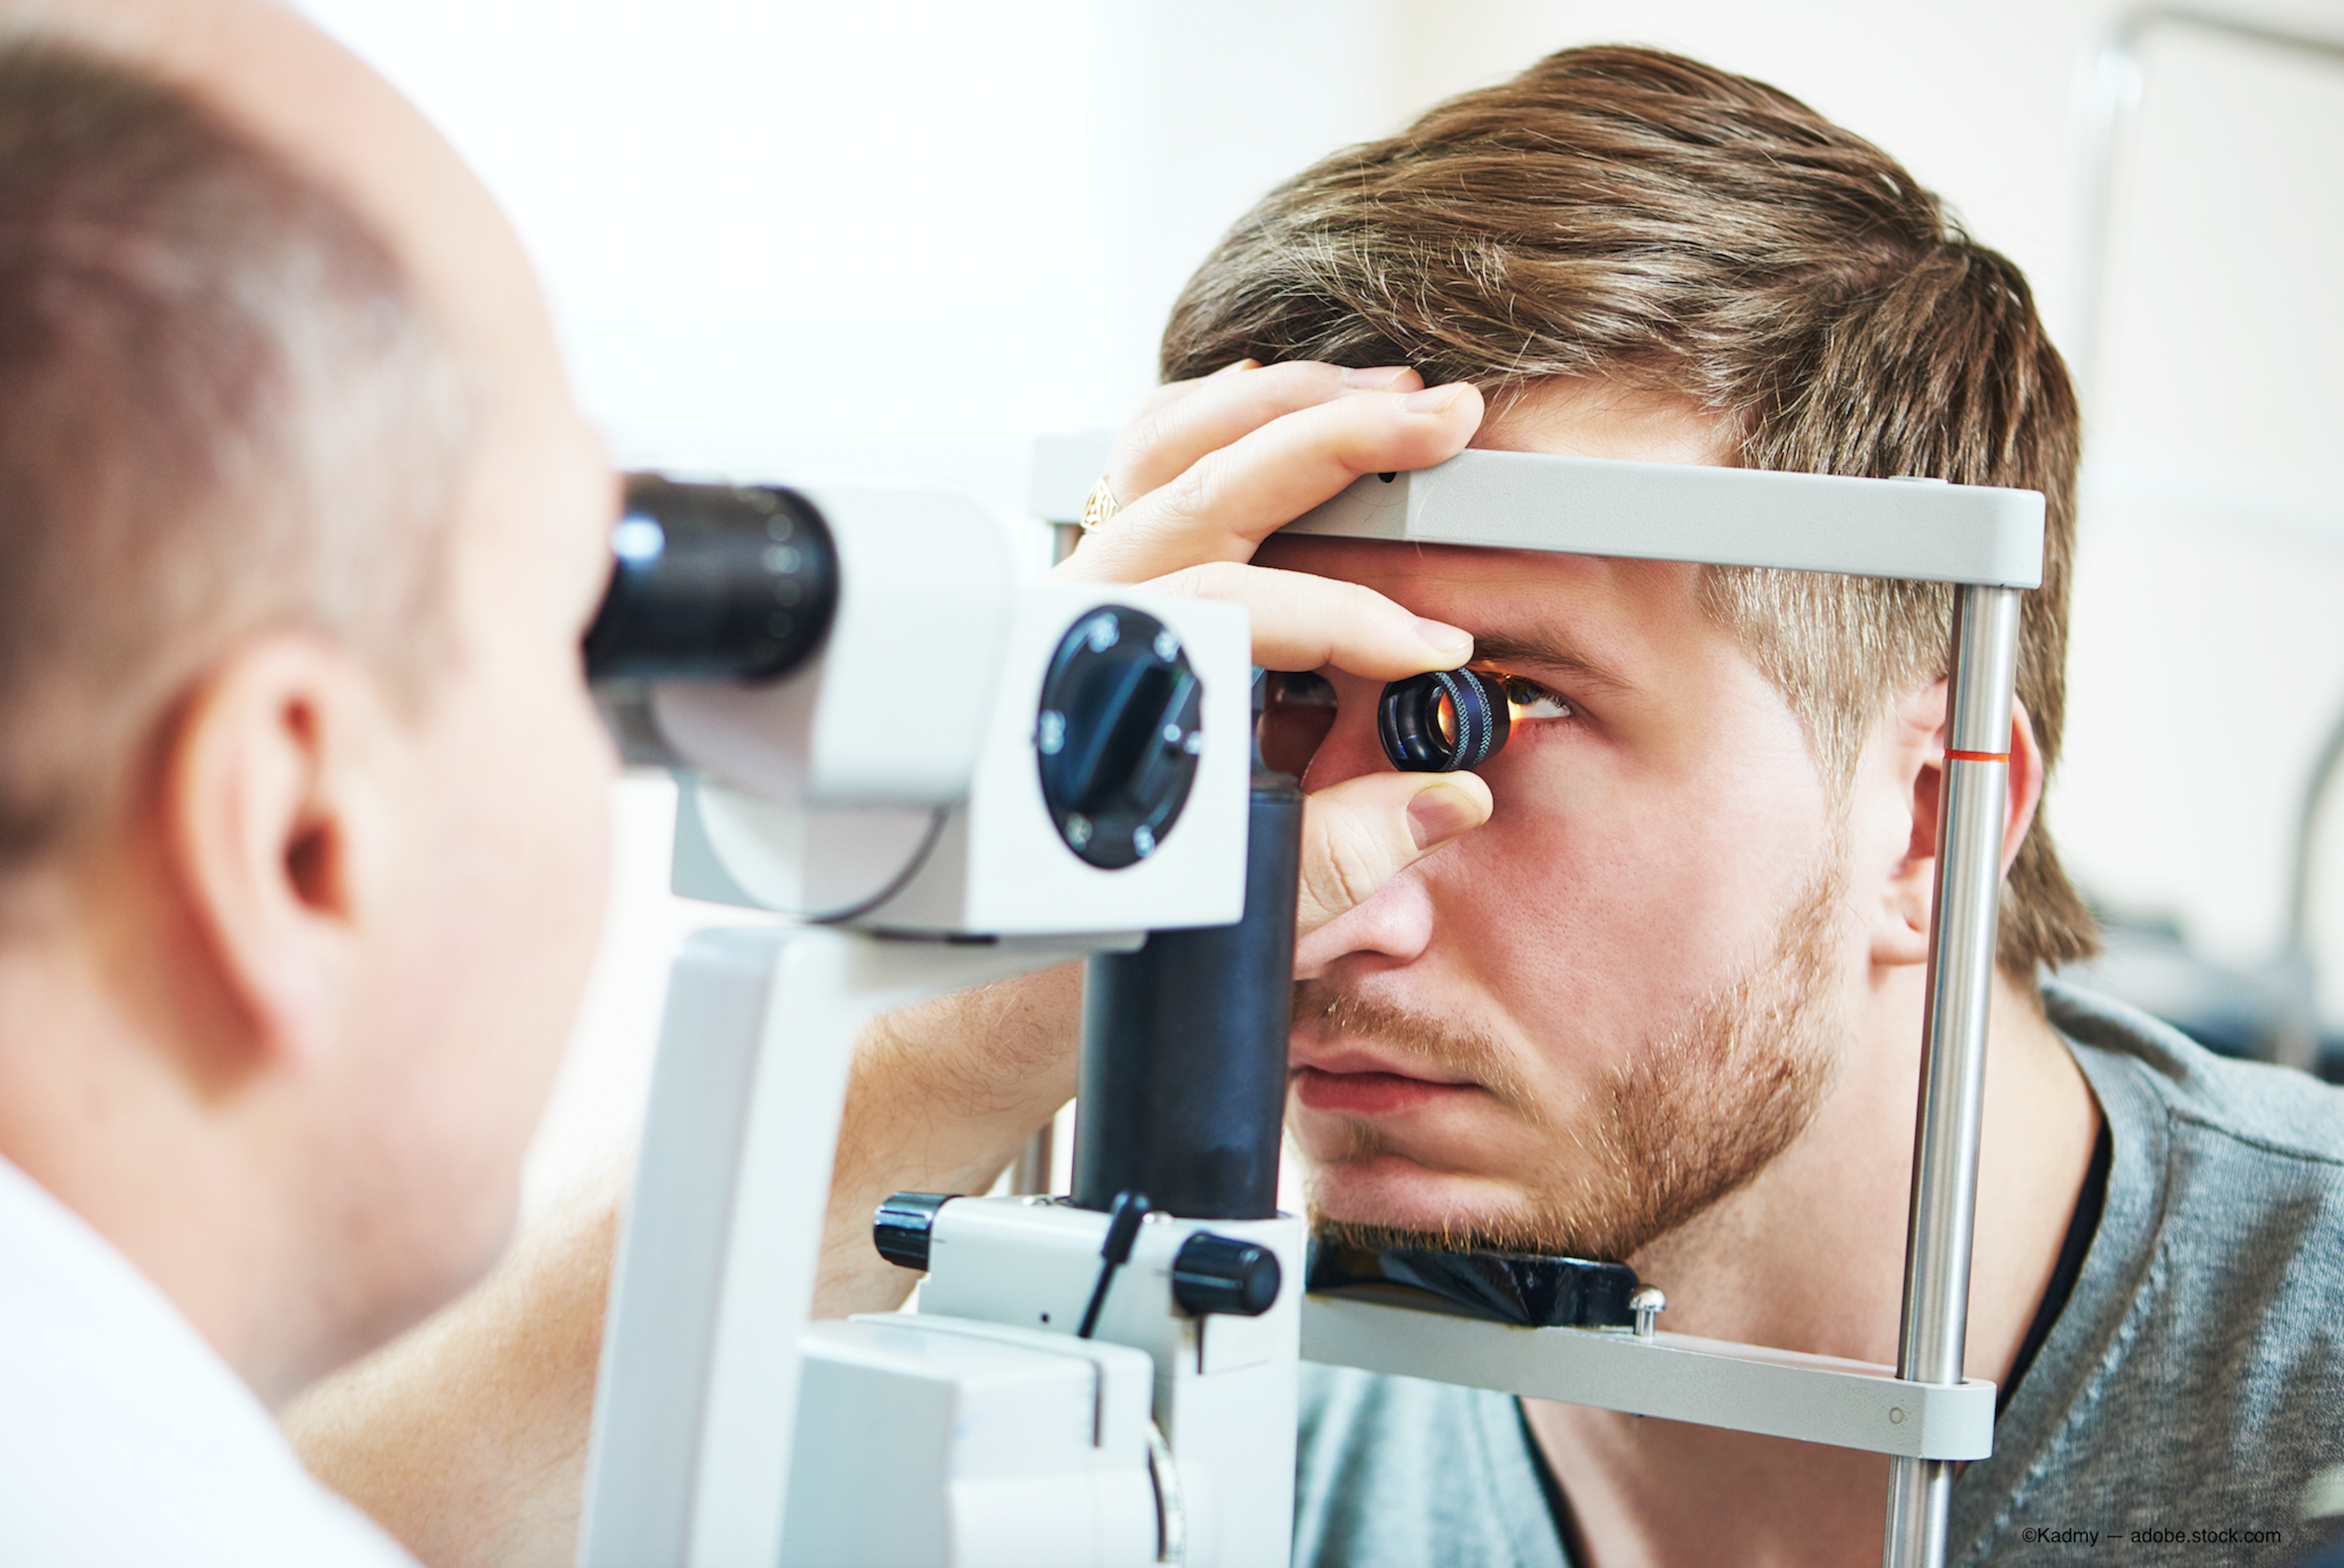 Lamina cribrosa deformation a potential prognostic factor in glaucoma